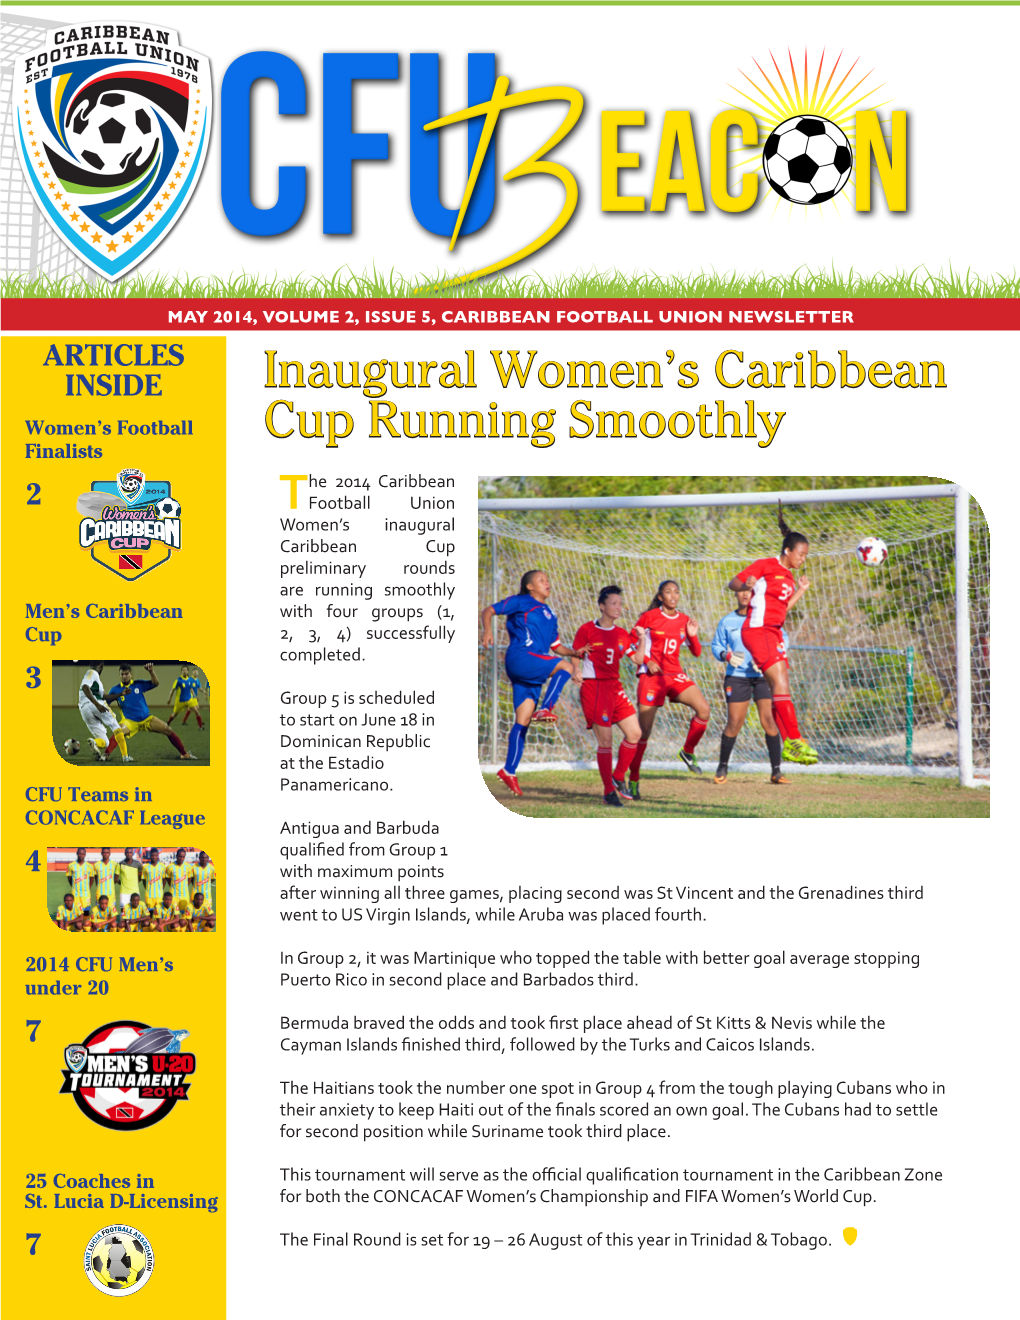 CFU Women's Caribbean Cup Groups 1